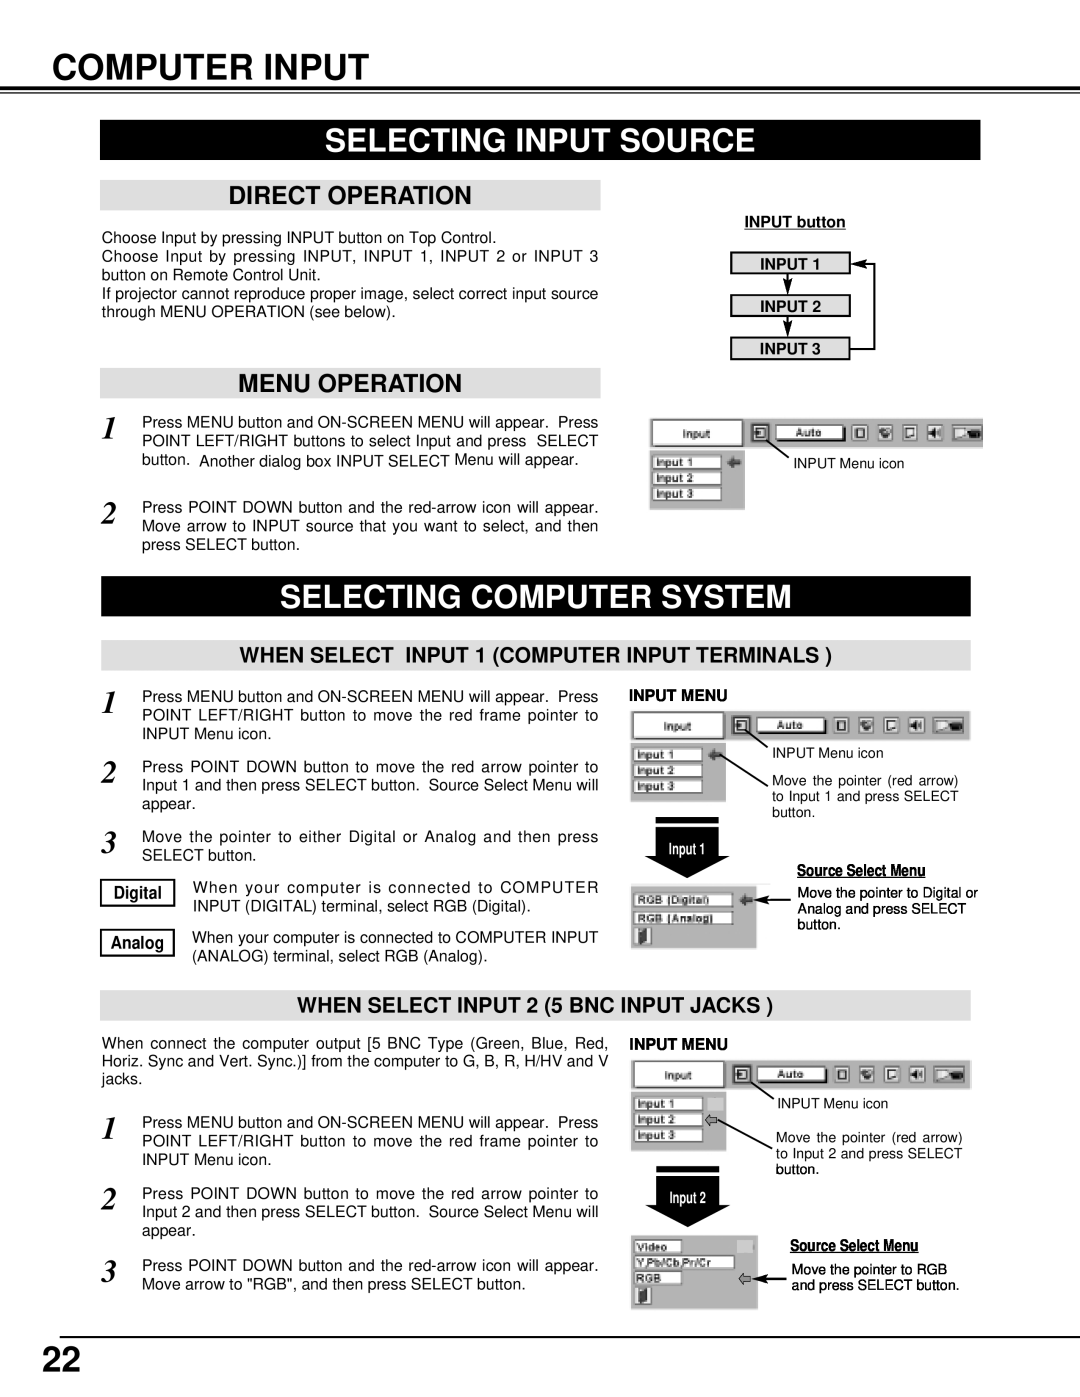 BOXLIGHT CINEMA 20HD Computer Input, Selecting Input Source, Selecting Computer System, Direct Operation, Menu Operation 